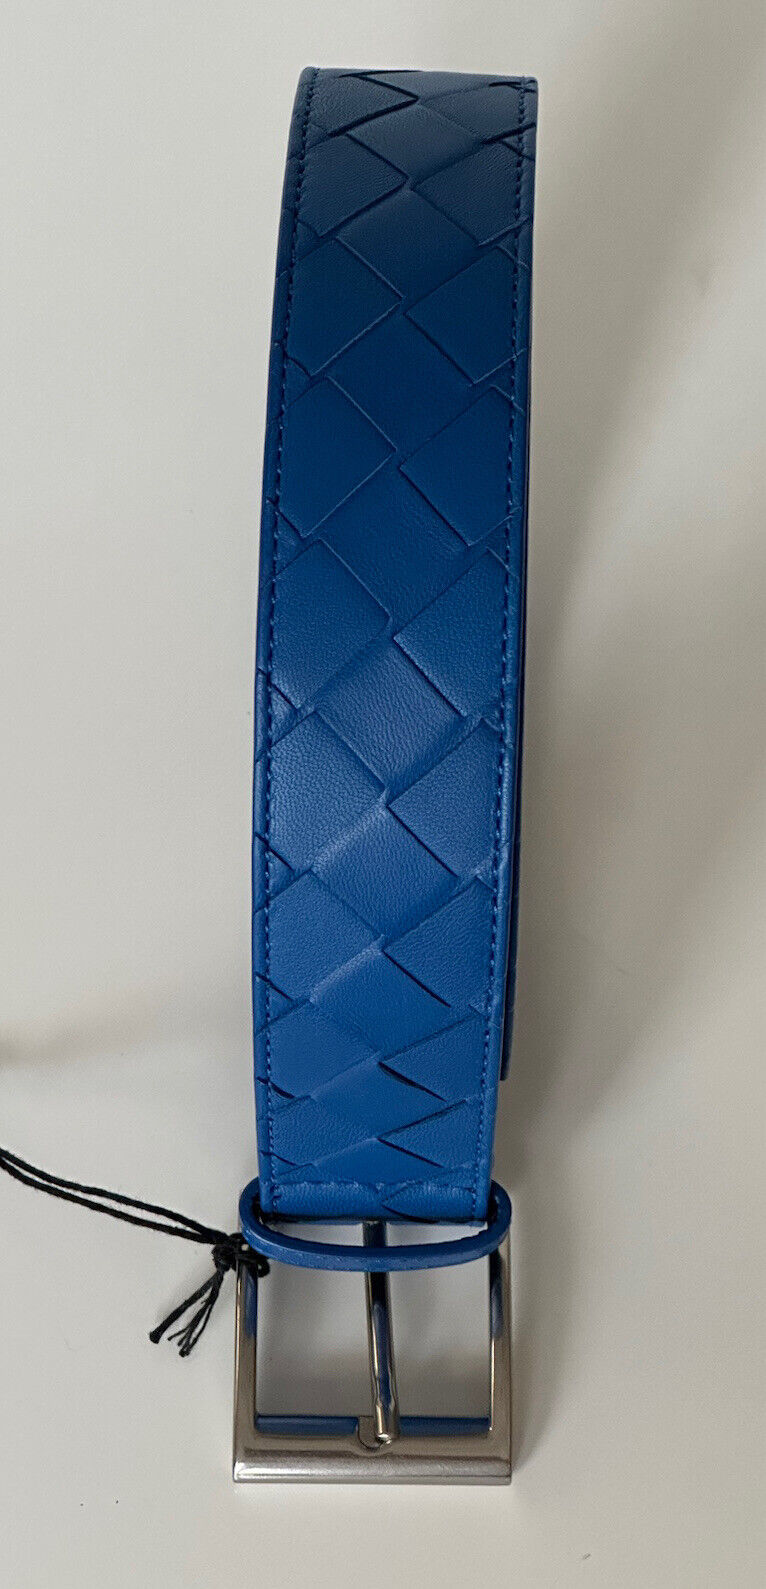 NWT $580 Синий ремень Bottega Veneta Intrecciato из кожи наппа 36/90 IT 580673 